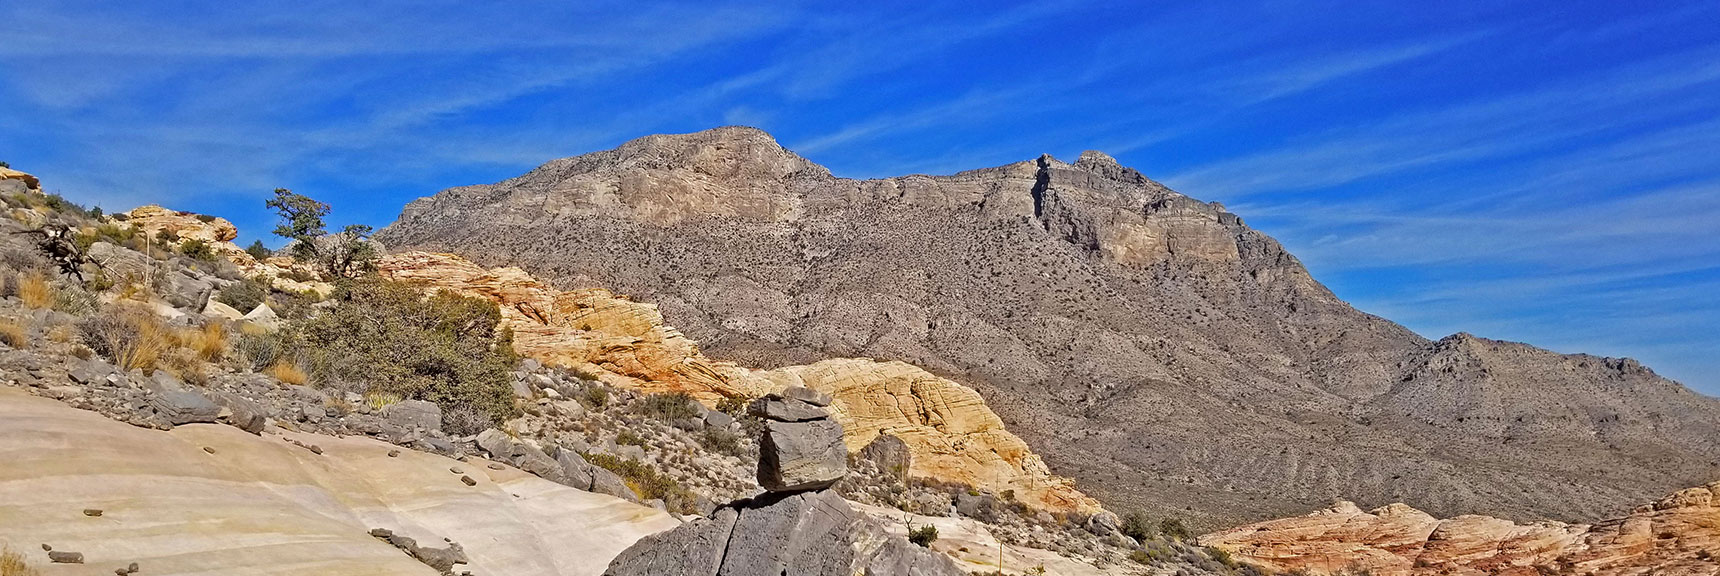 Damsel Peak Comes into View | Kraft Mountain, Gateway Canyon Loop, Calico Basin, Nevada